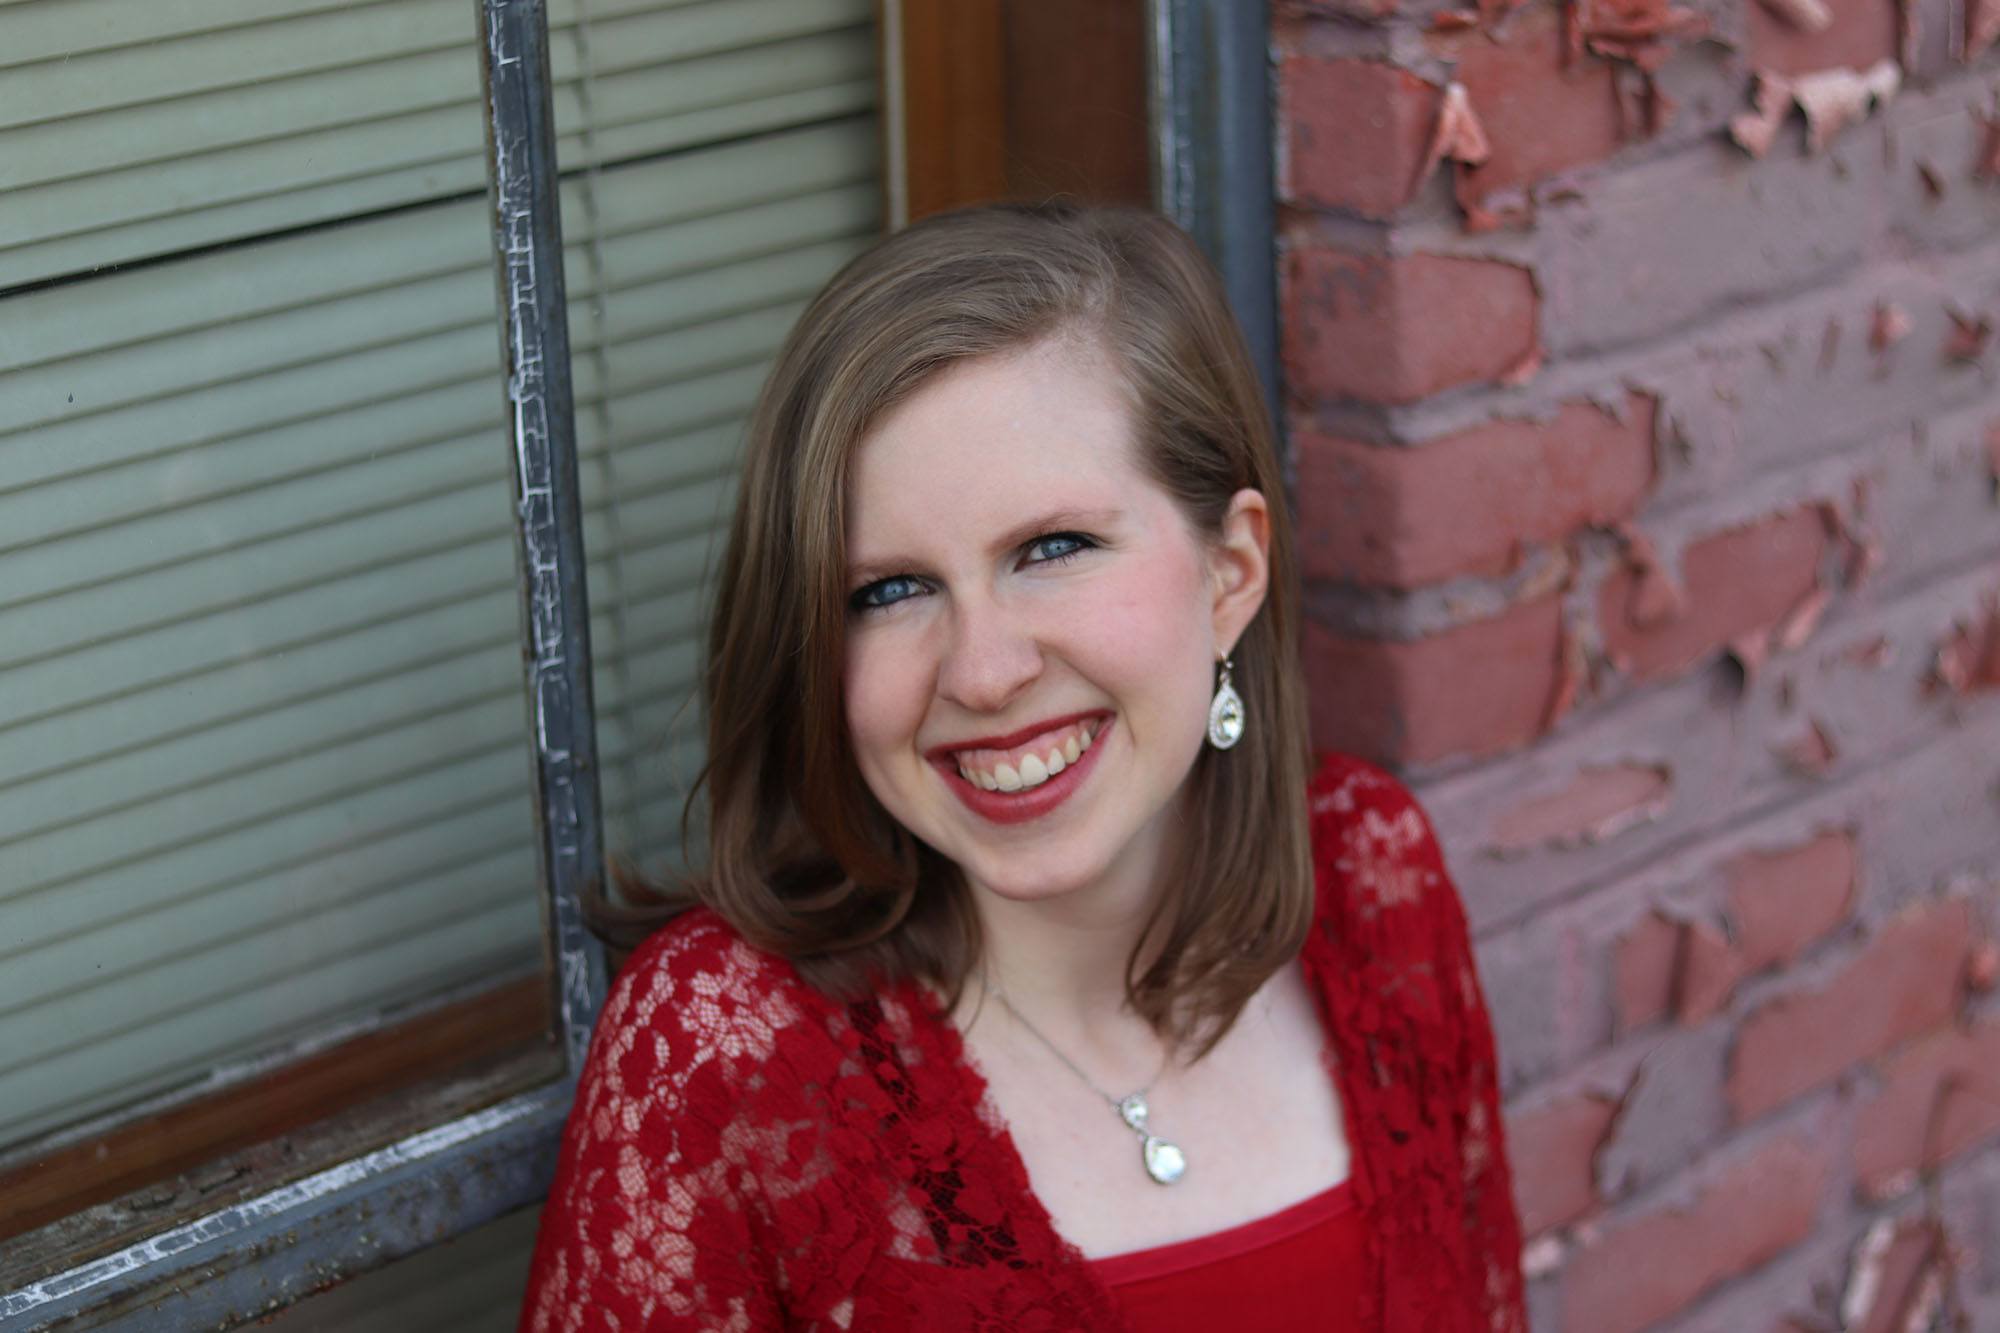 author Amanda Barratt wearing a red dress against a brick wall backdrop